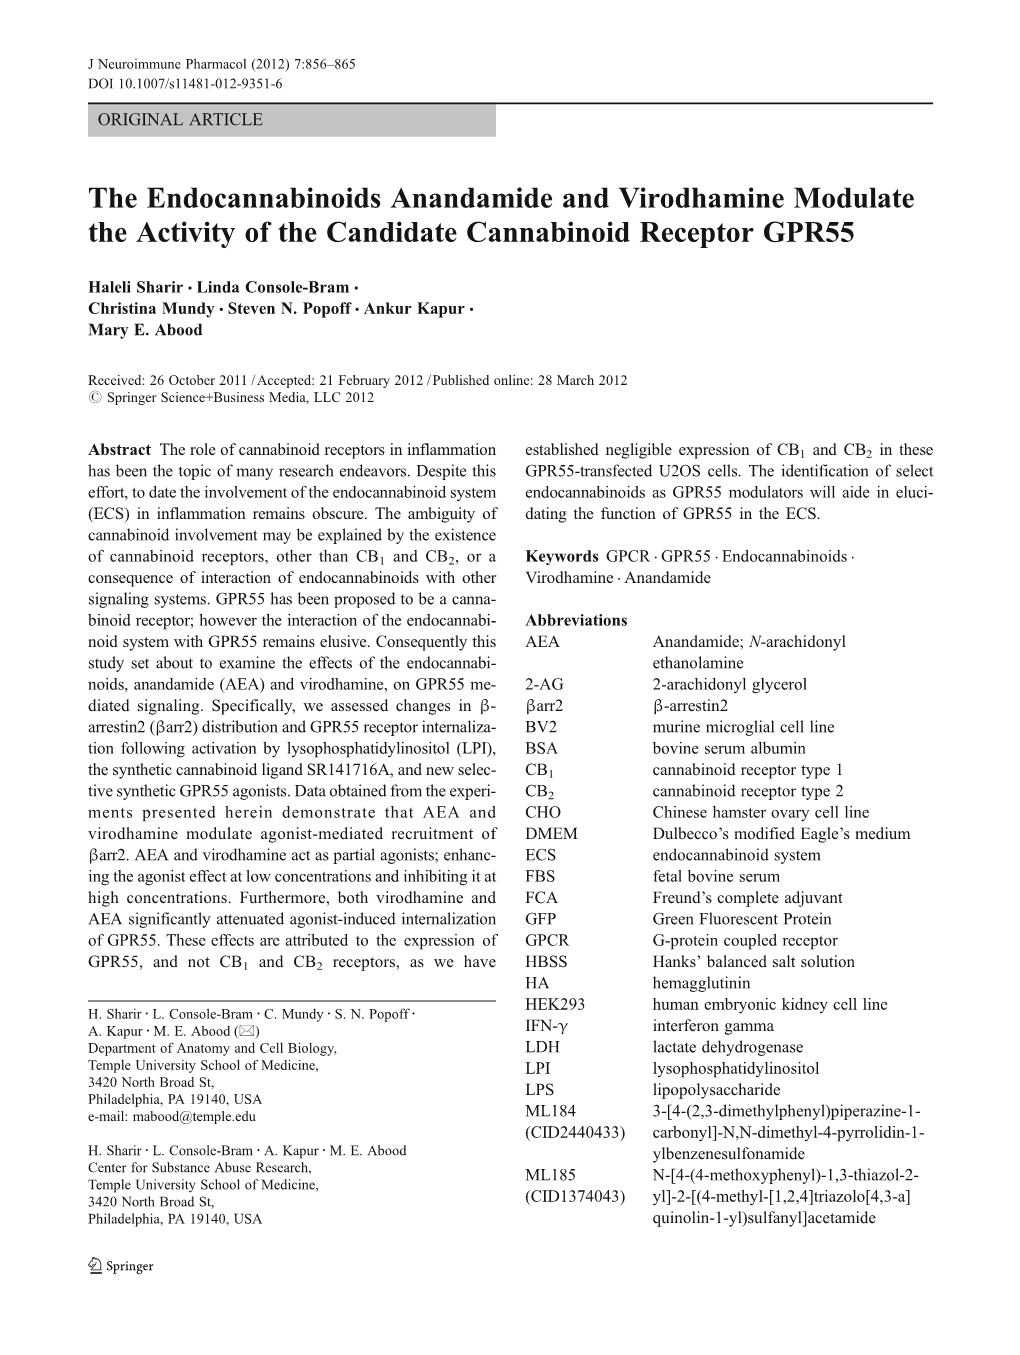 The Endocannabinoids Anandamide and Virodhamine Modulate the Activity of the Candidate Cannabinoid Receptor GPR55